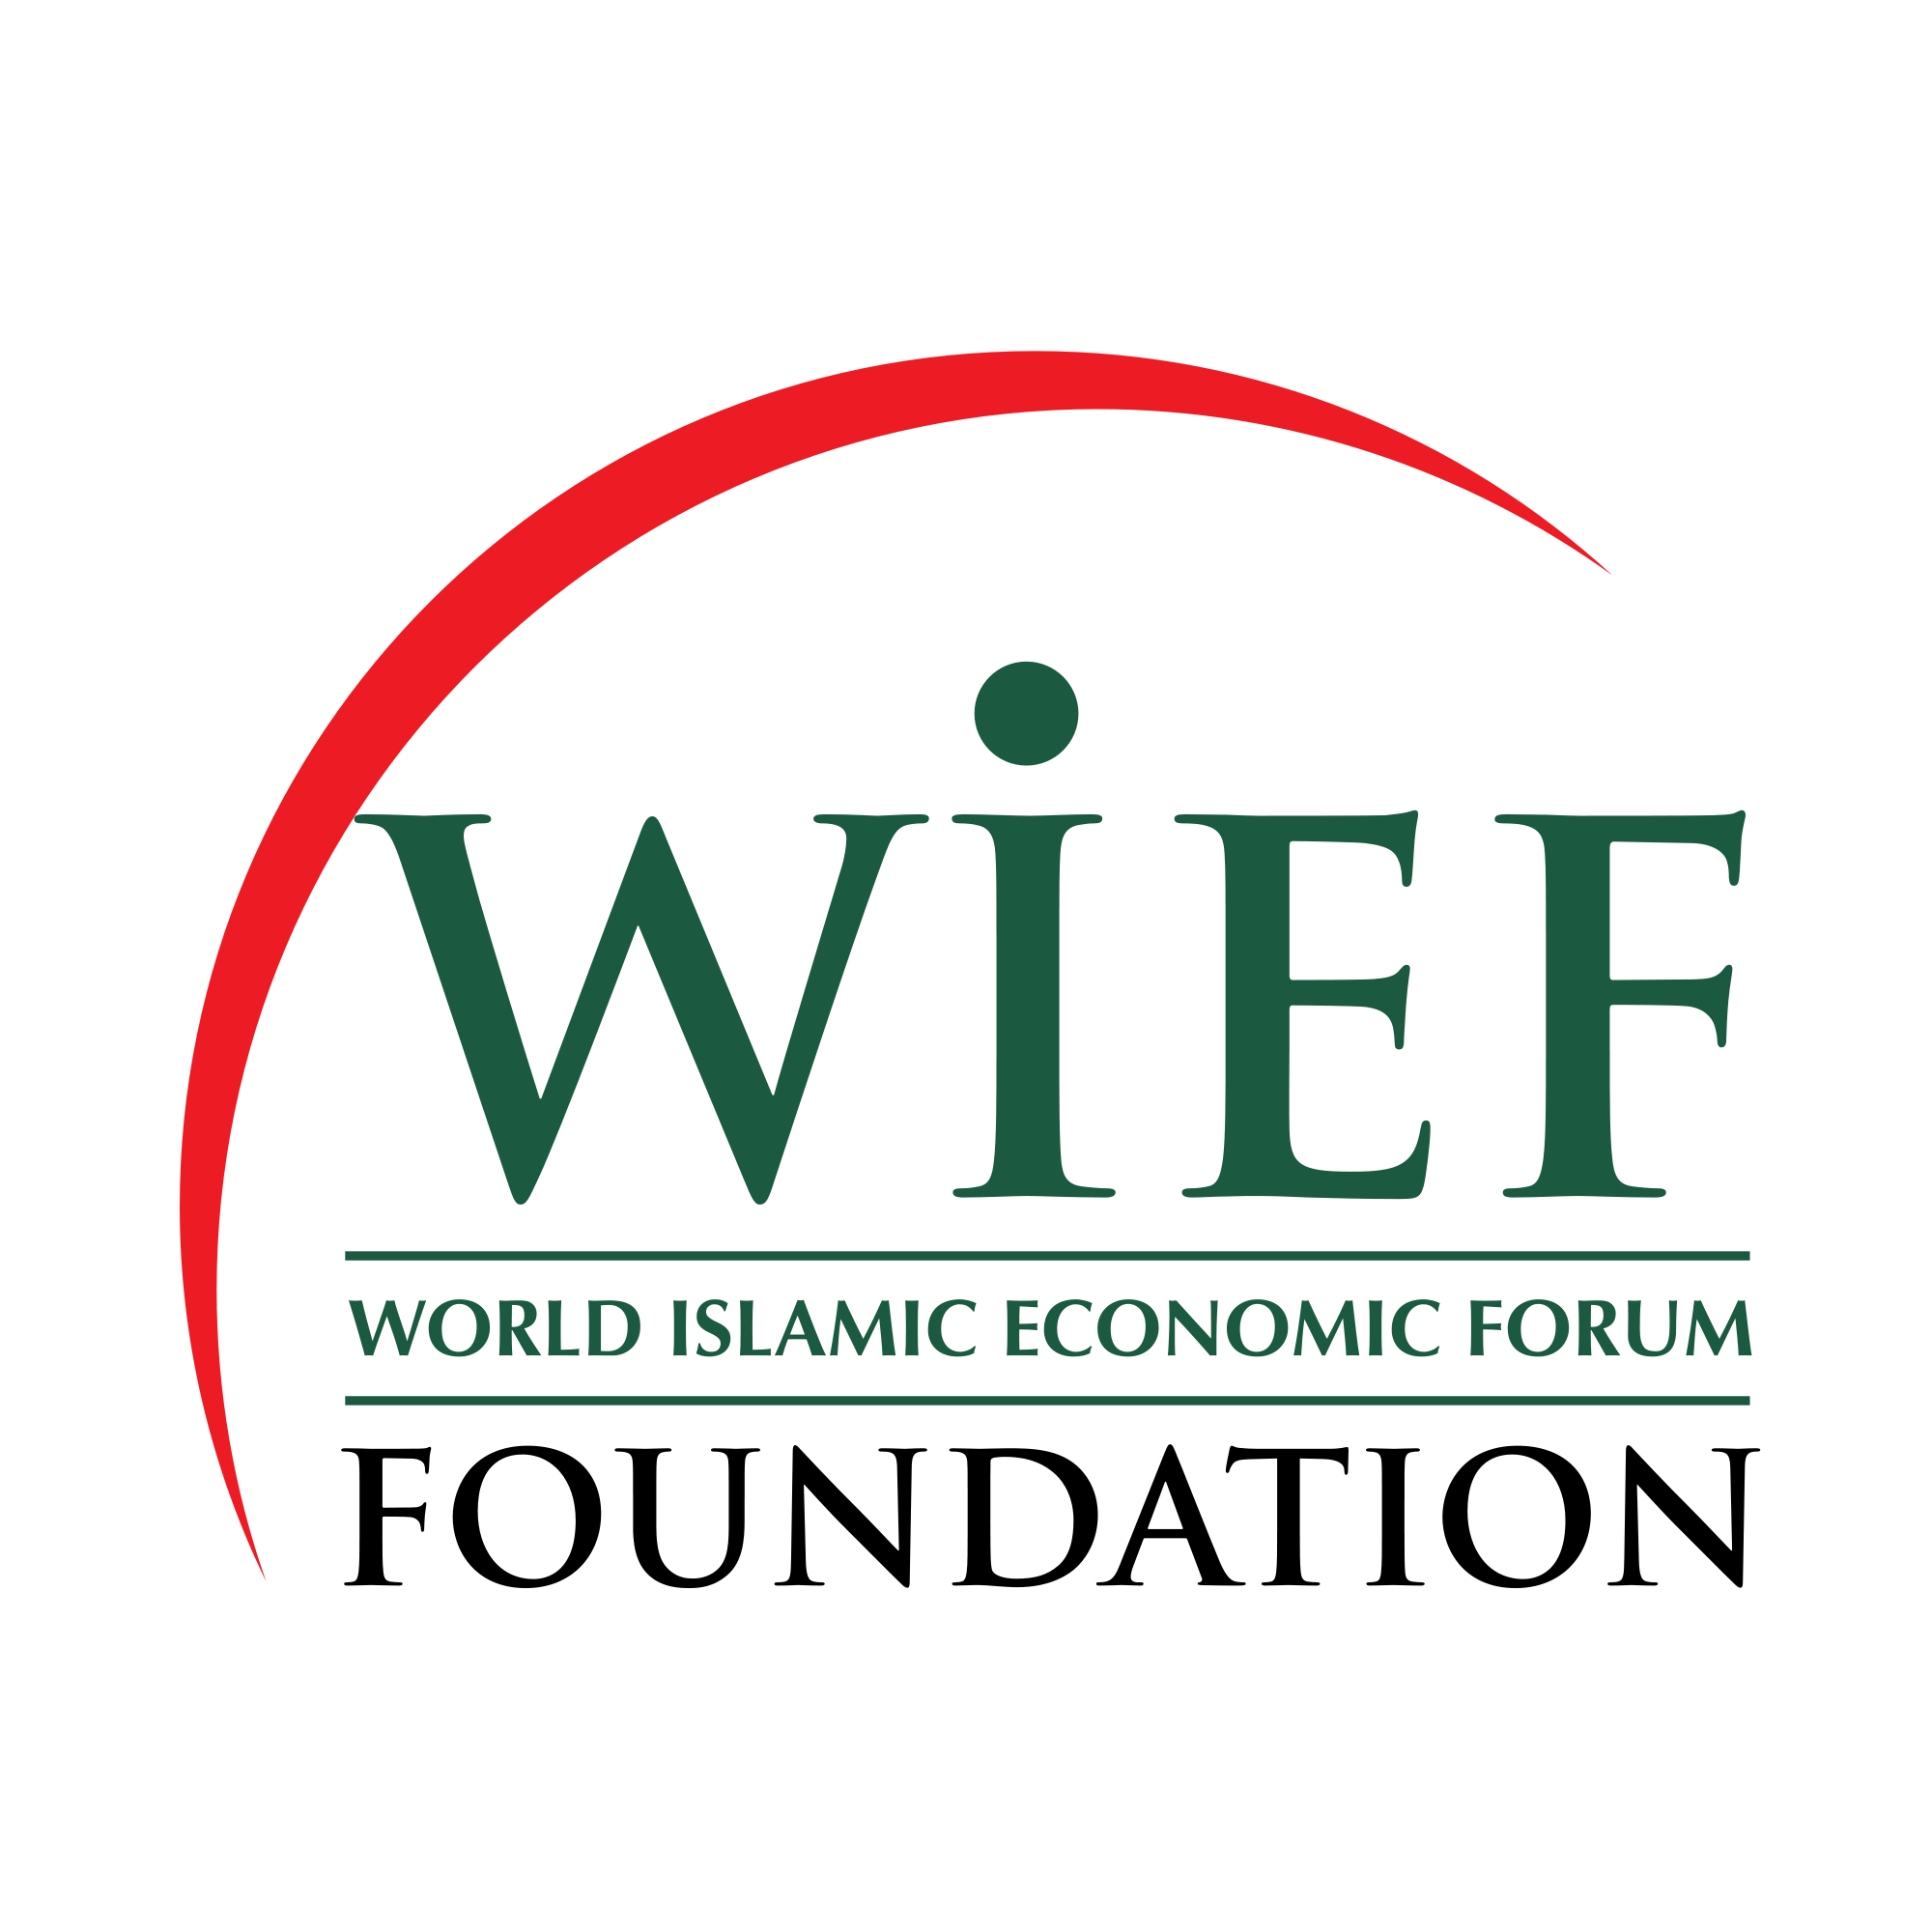 Abu Dhabi hosts World Islamic Economic Forum in 2024 15th to 17th January - World Islamic Economic Forum Foundation